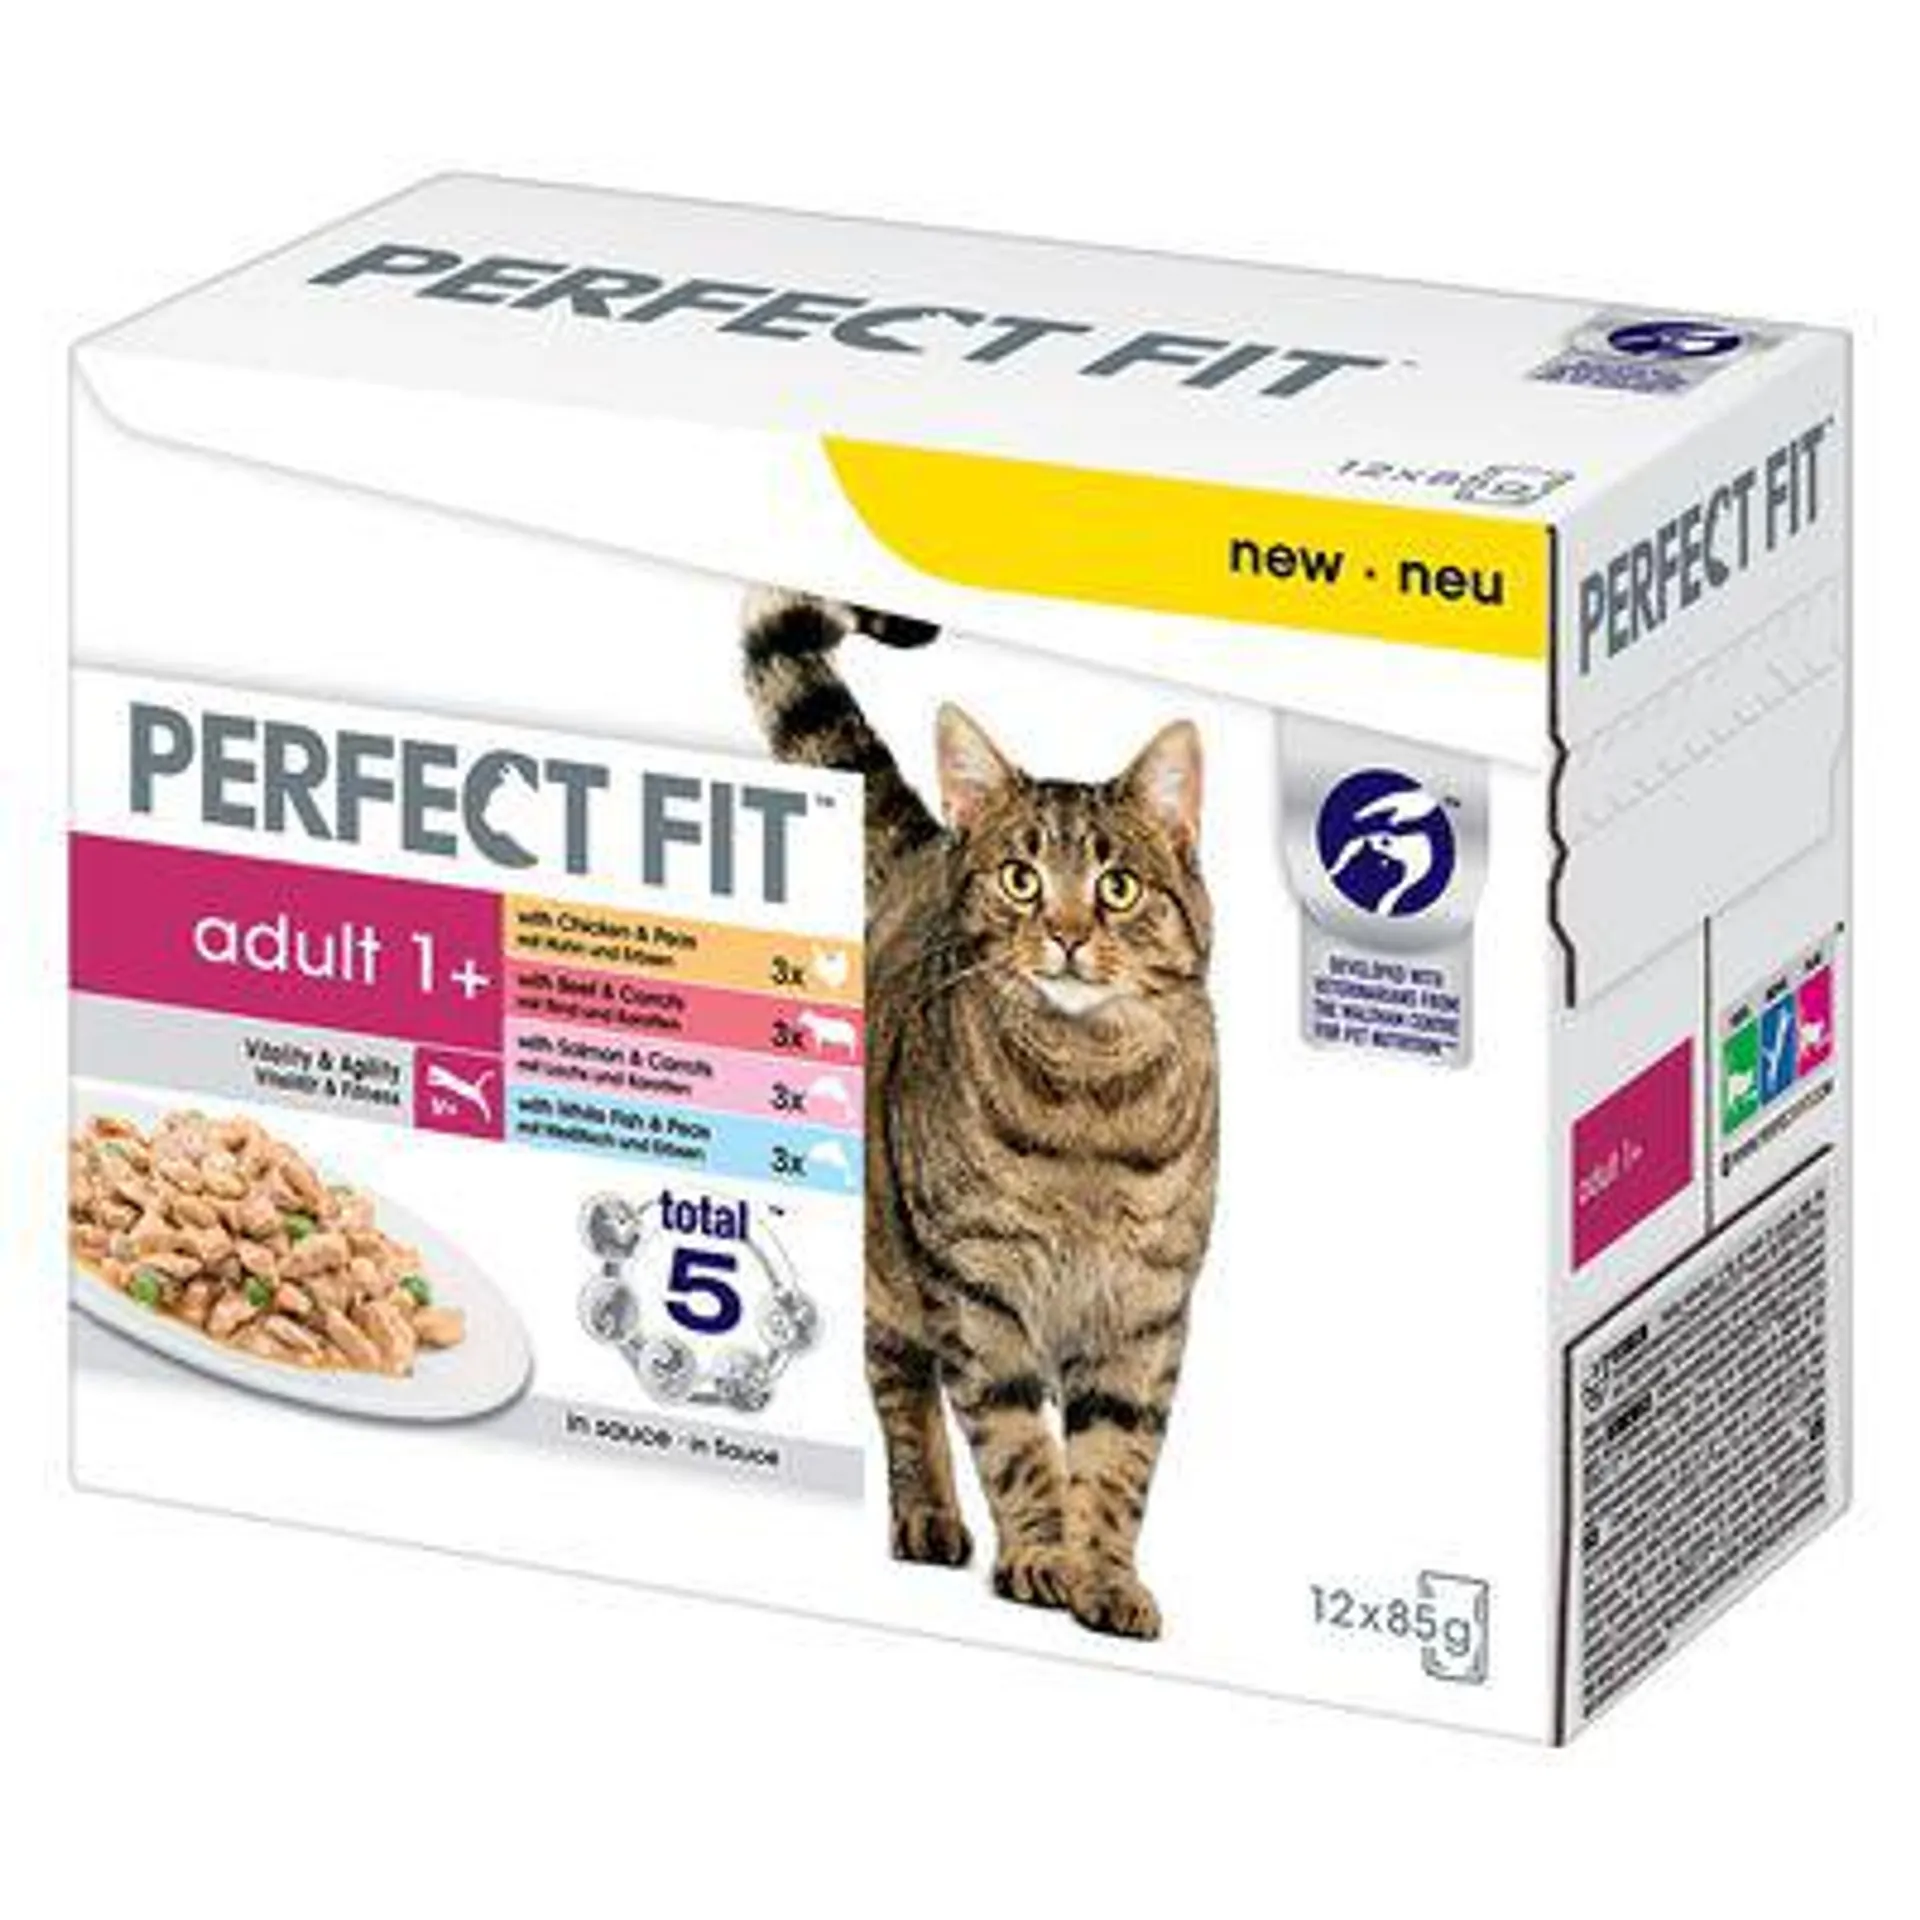 12 x 85g Perfect Fit Wet Cat Food - 15% Off! *